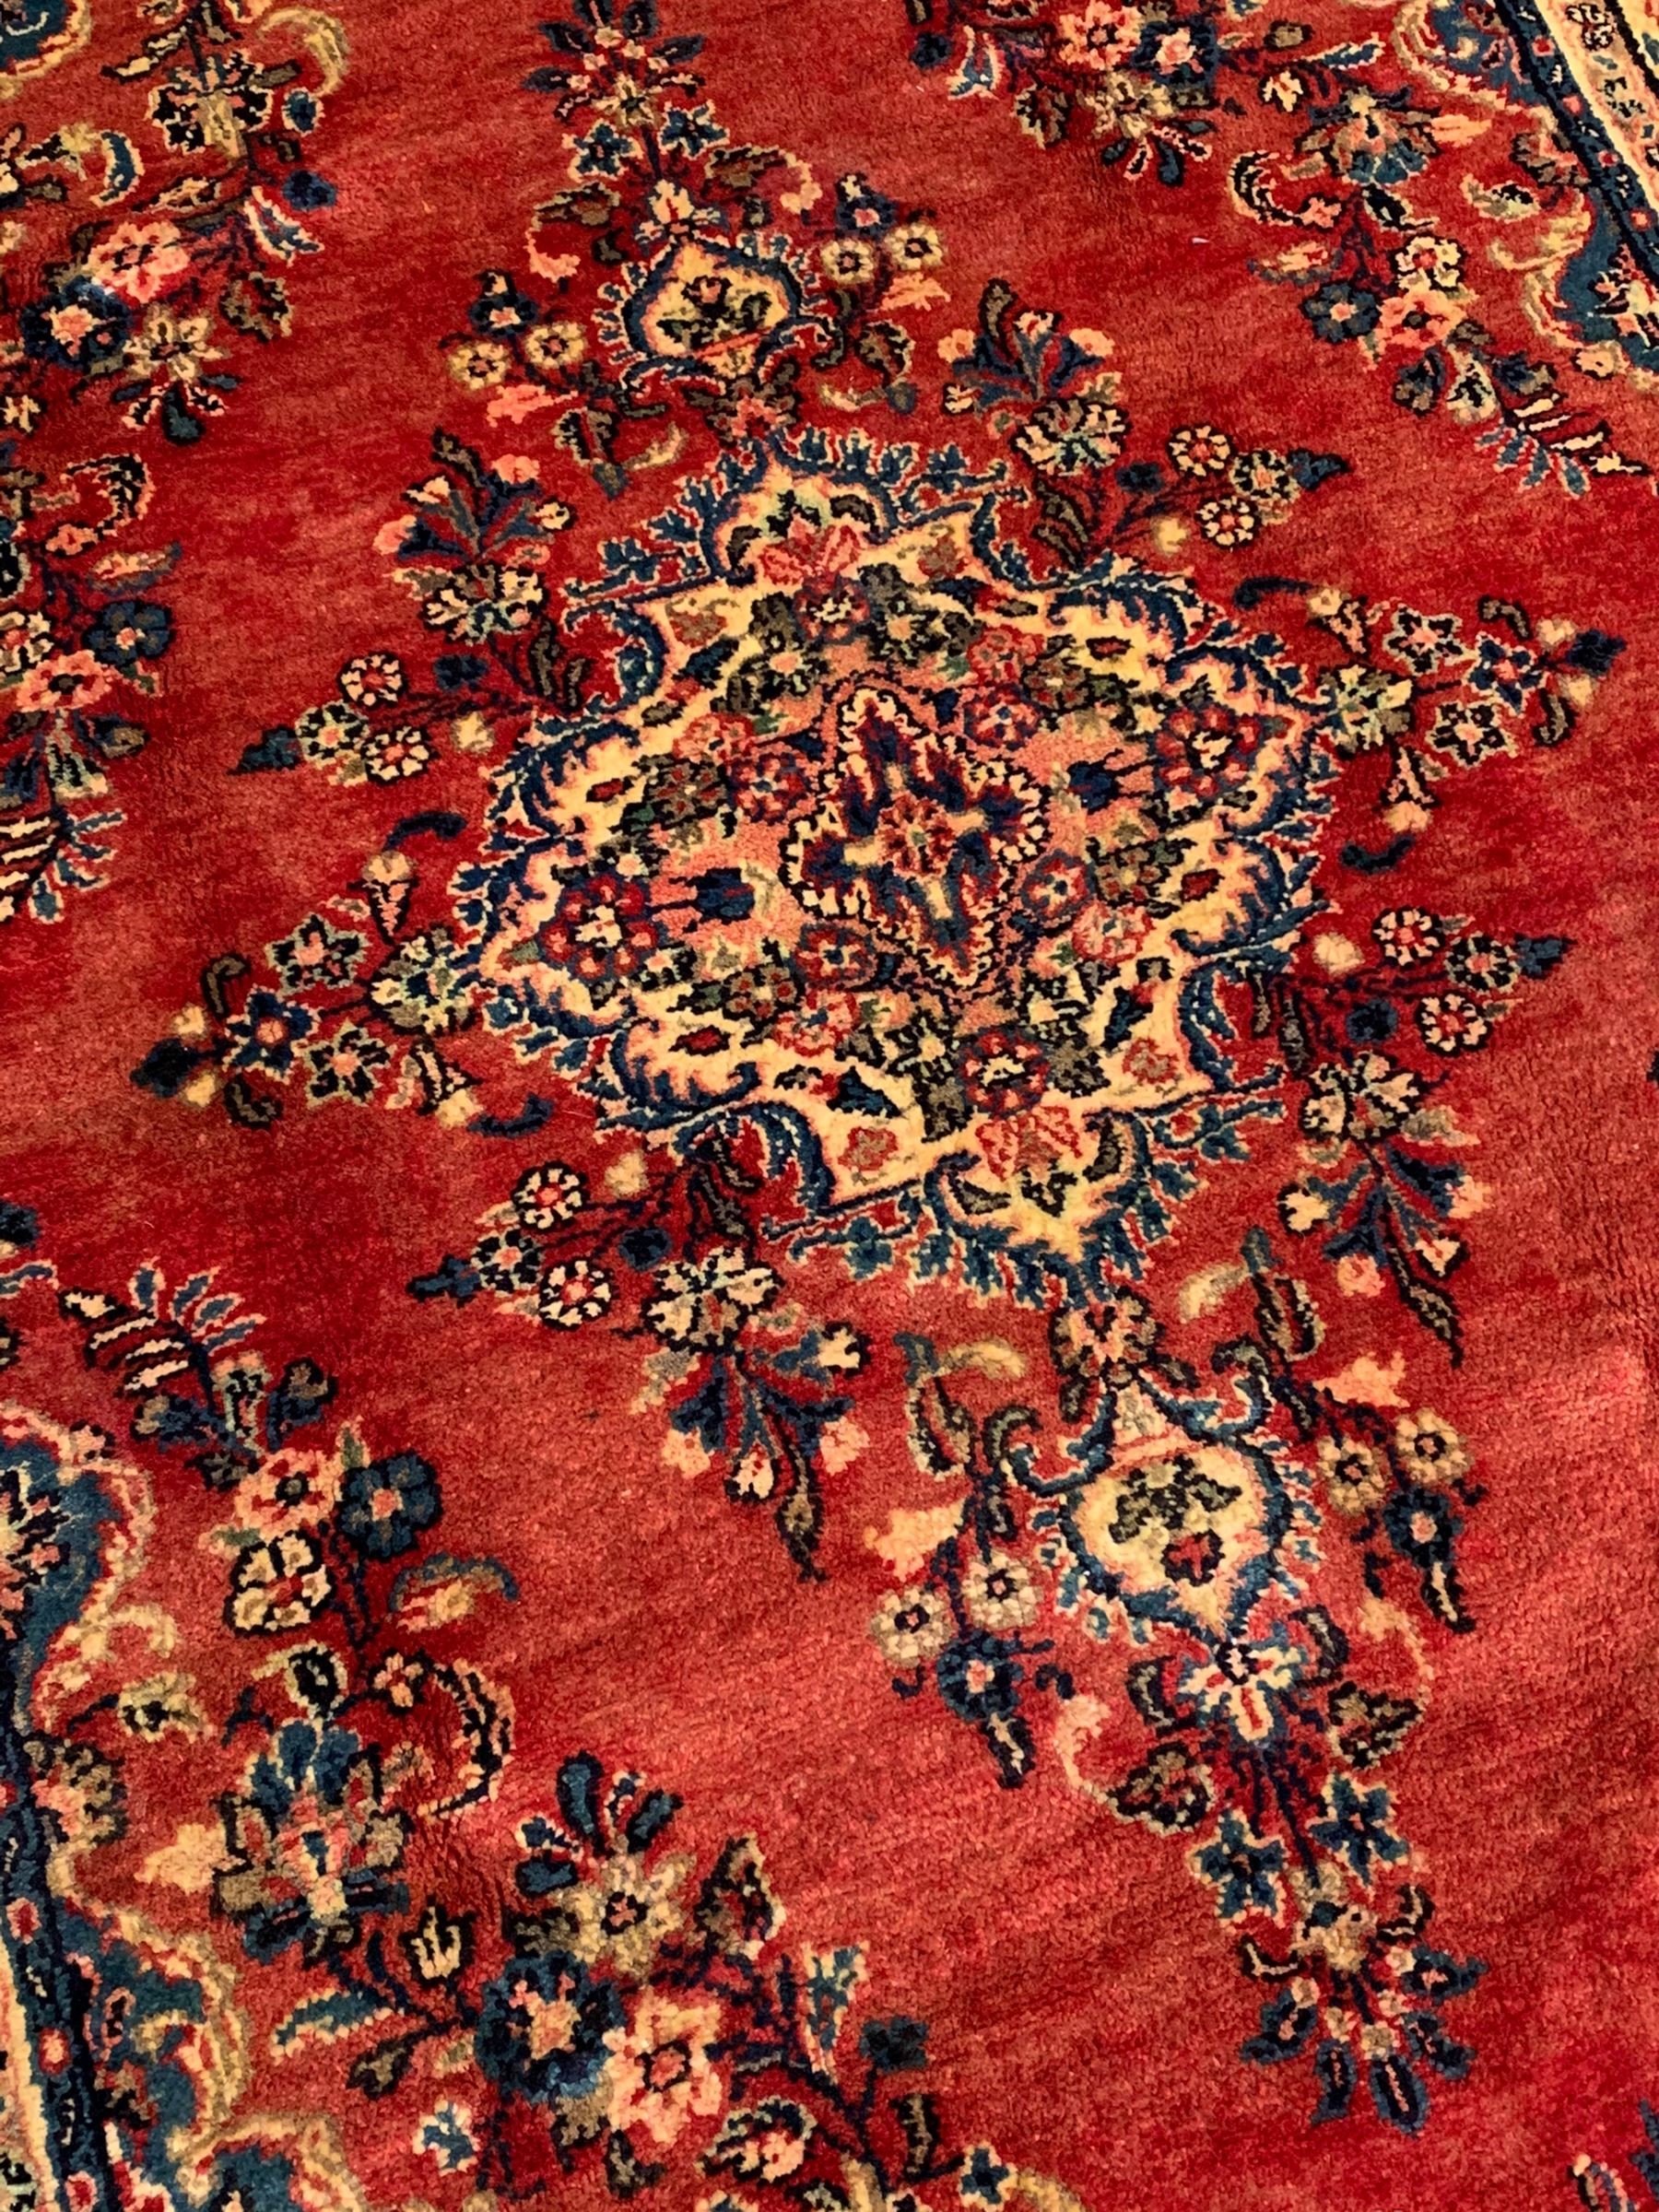 Persian crimson ground rug - Image 7 of 8